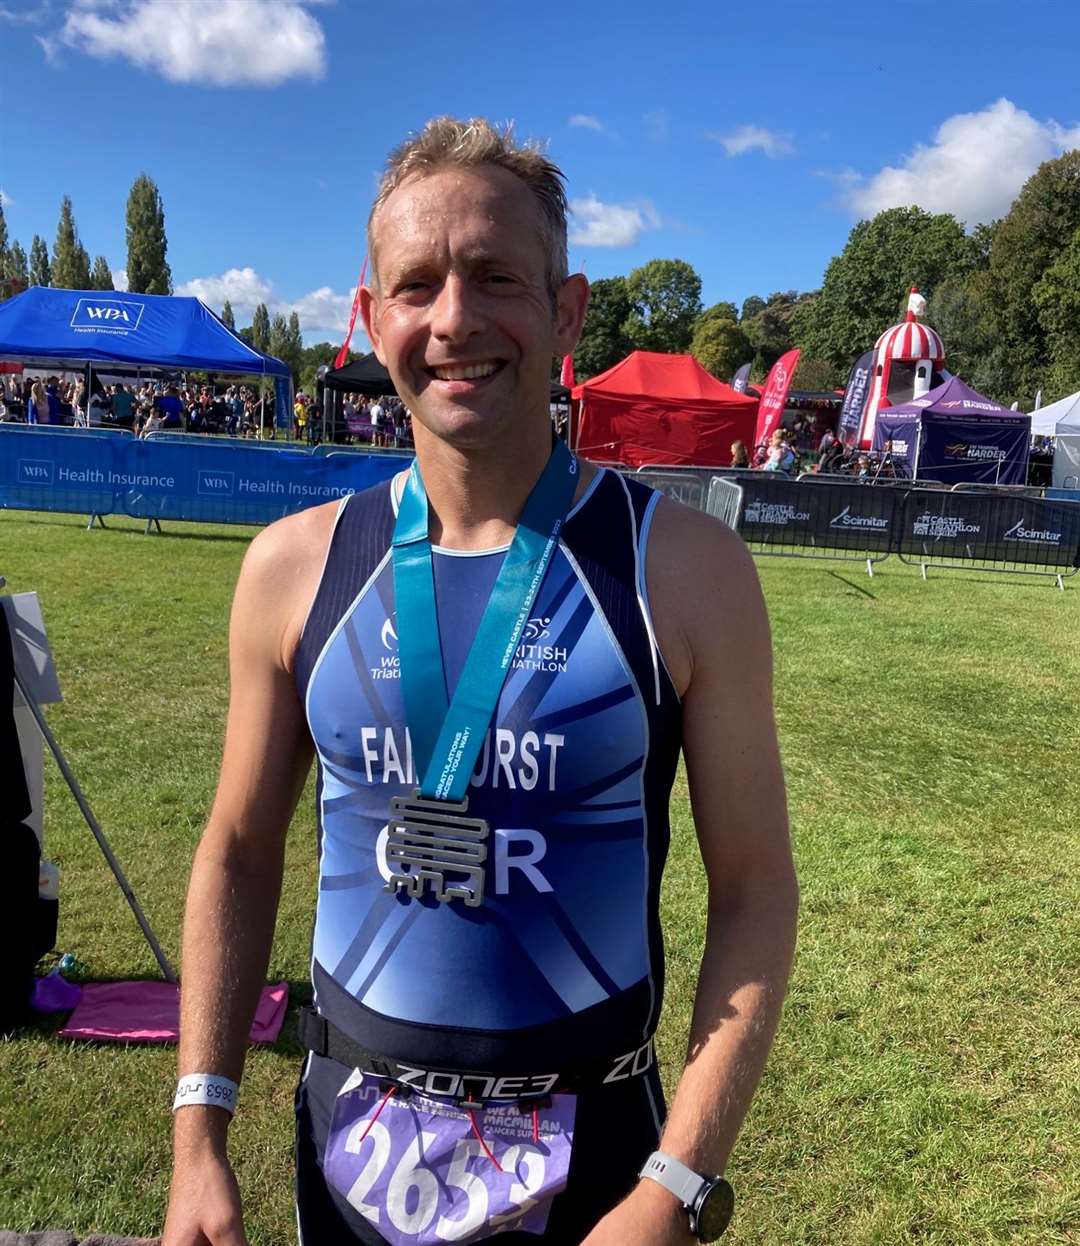 Roger Fairhurst fell ill after taking part in a triathlon at Hever Castle